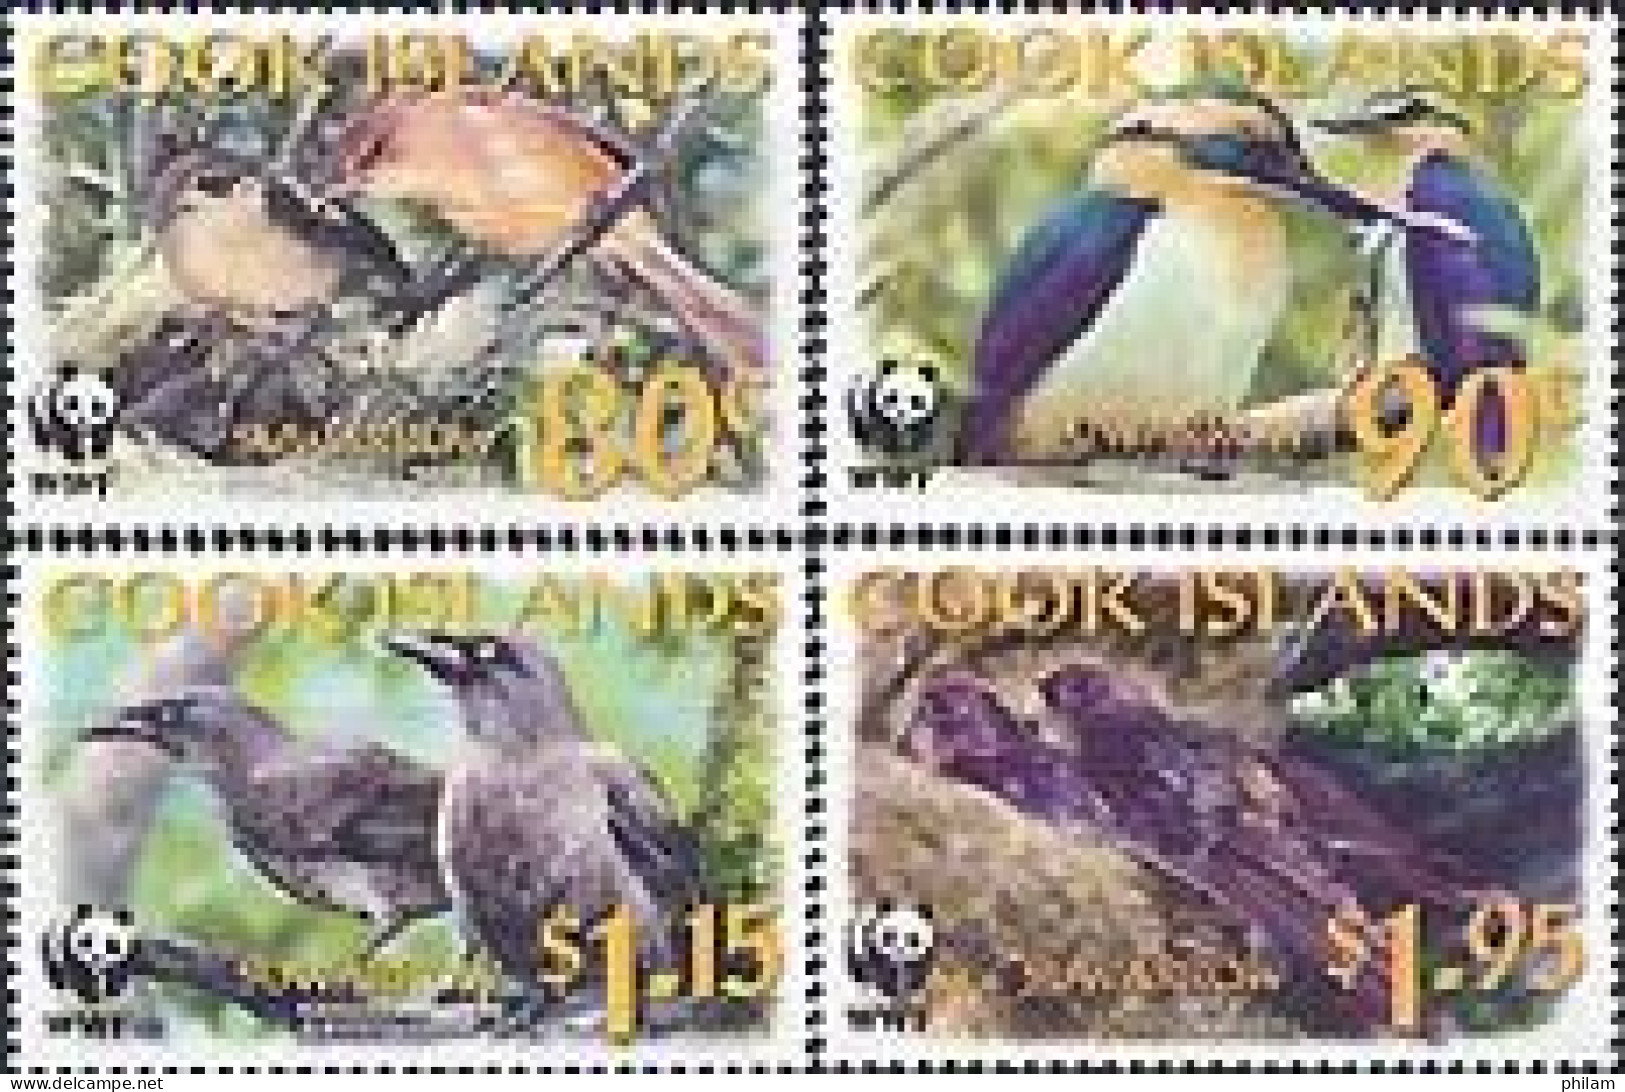 COOK 2005 - W.W.F. - Faune Locale - Oiseaux Terrestres - 4 V.- Suwarrow - Islas Cook